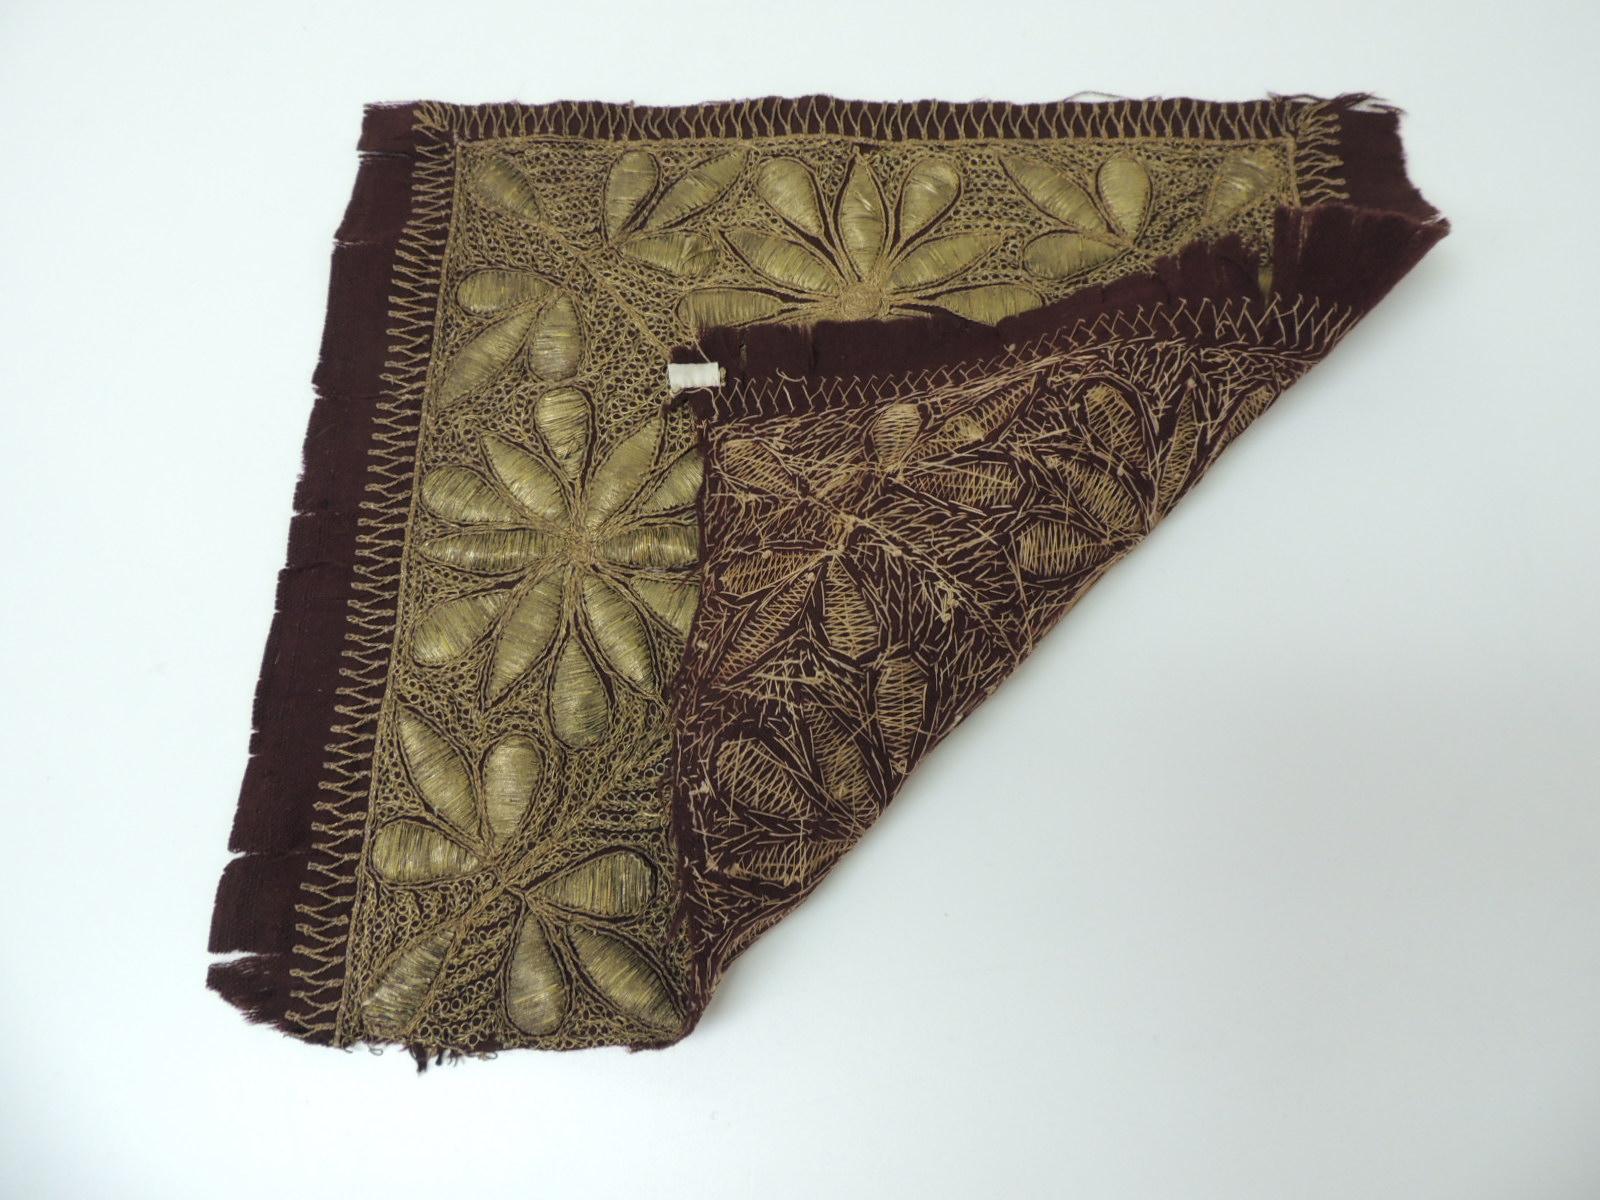 Moorish 19th c. Persian Ottoman Empire Gold Metallic Threads Embroidered Textile